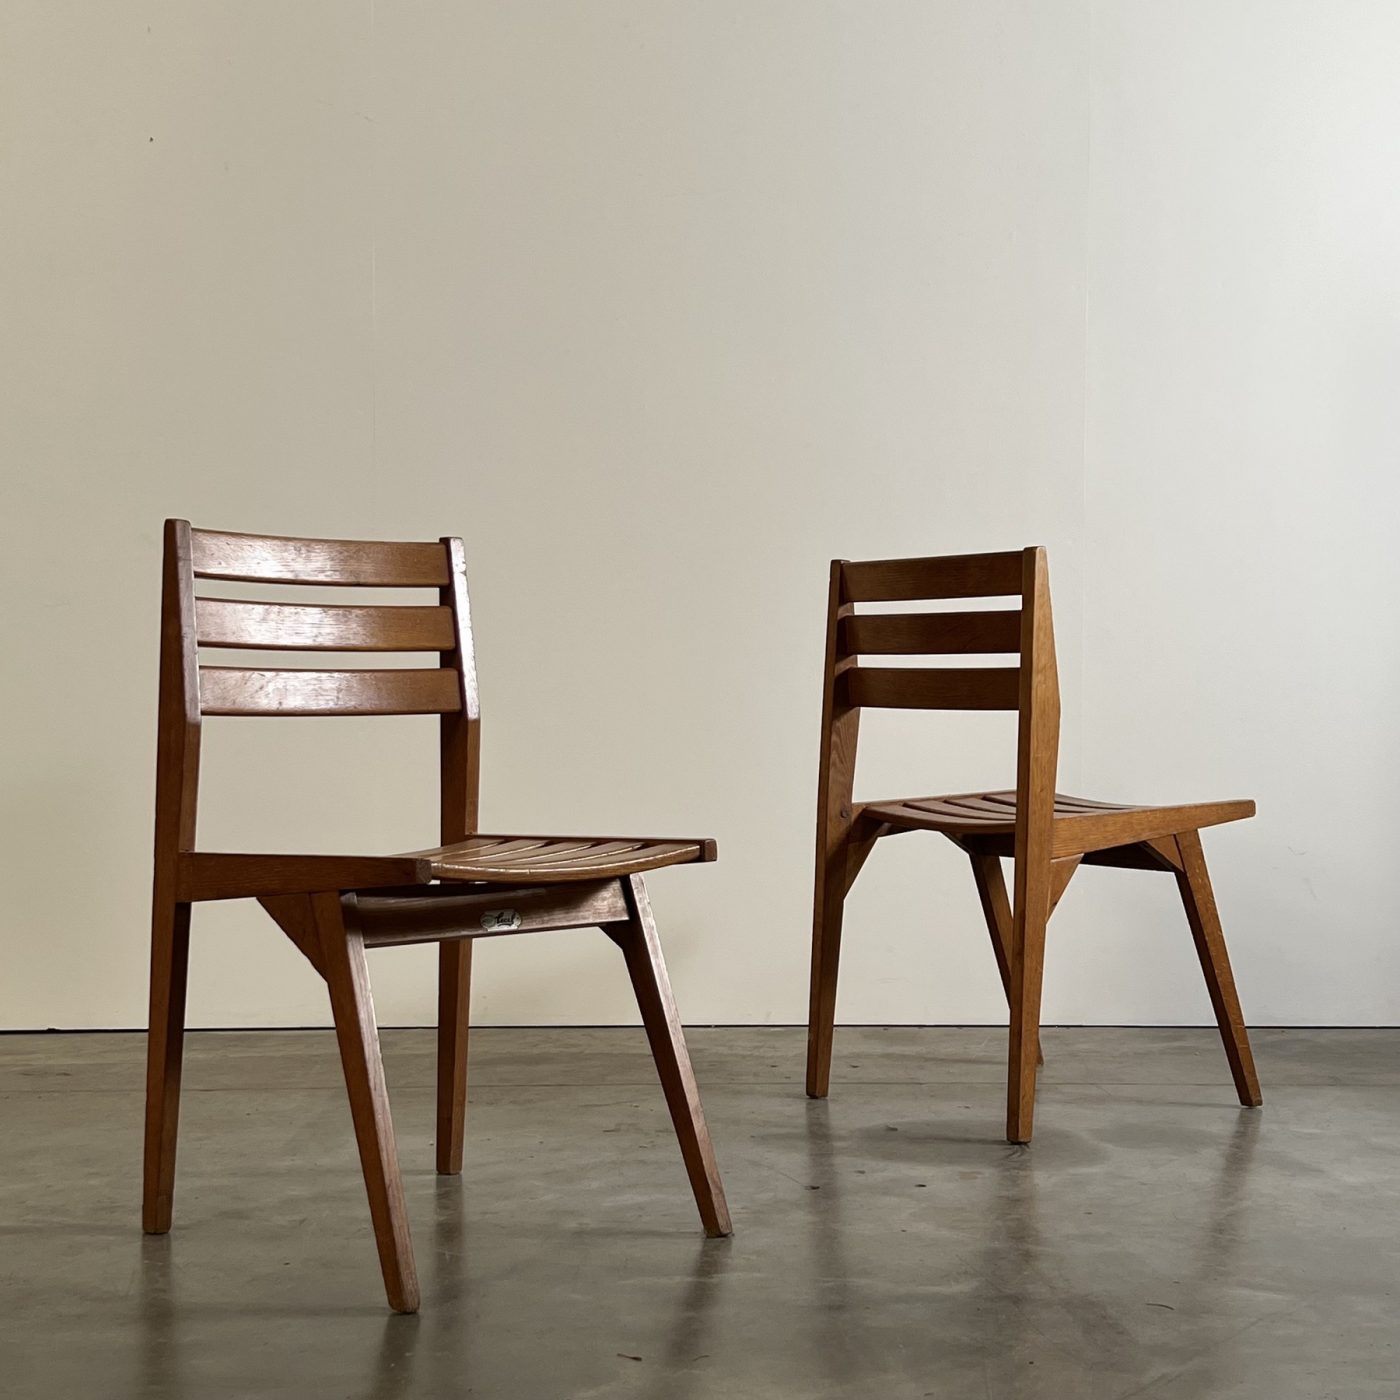 objet-vagabond-midcentury-chairs0005